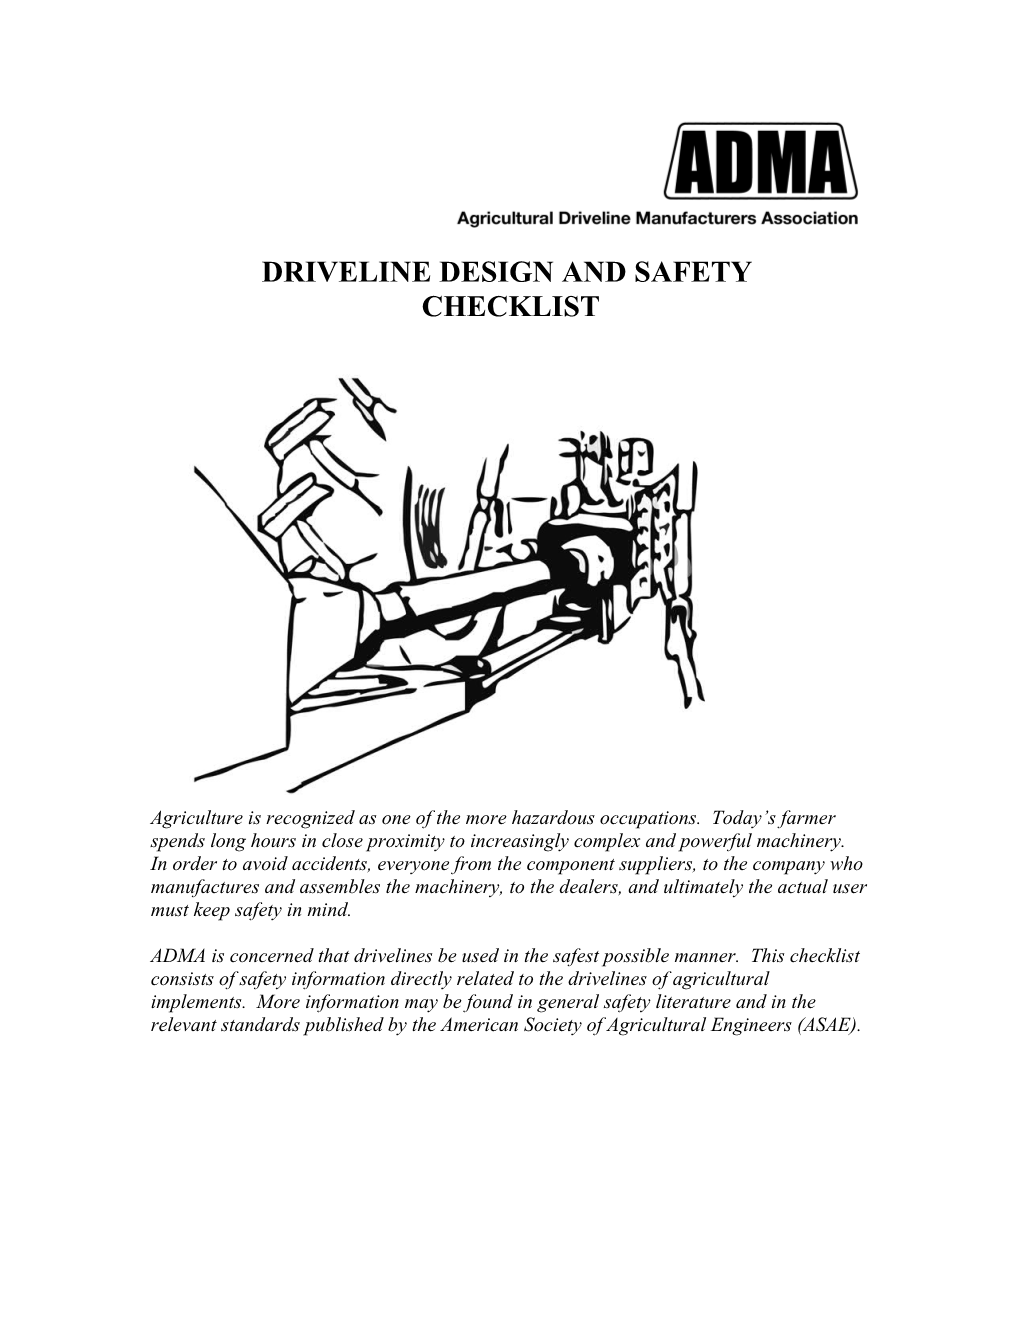 Driveline Design and Safety Checklist